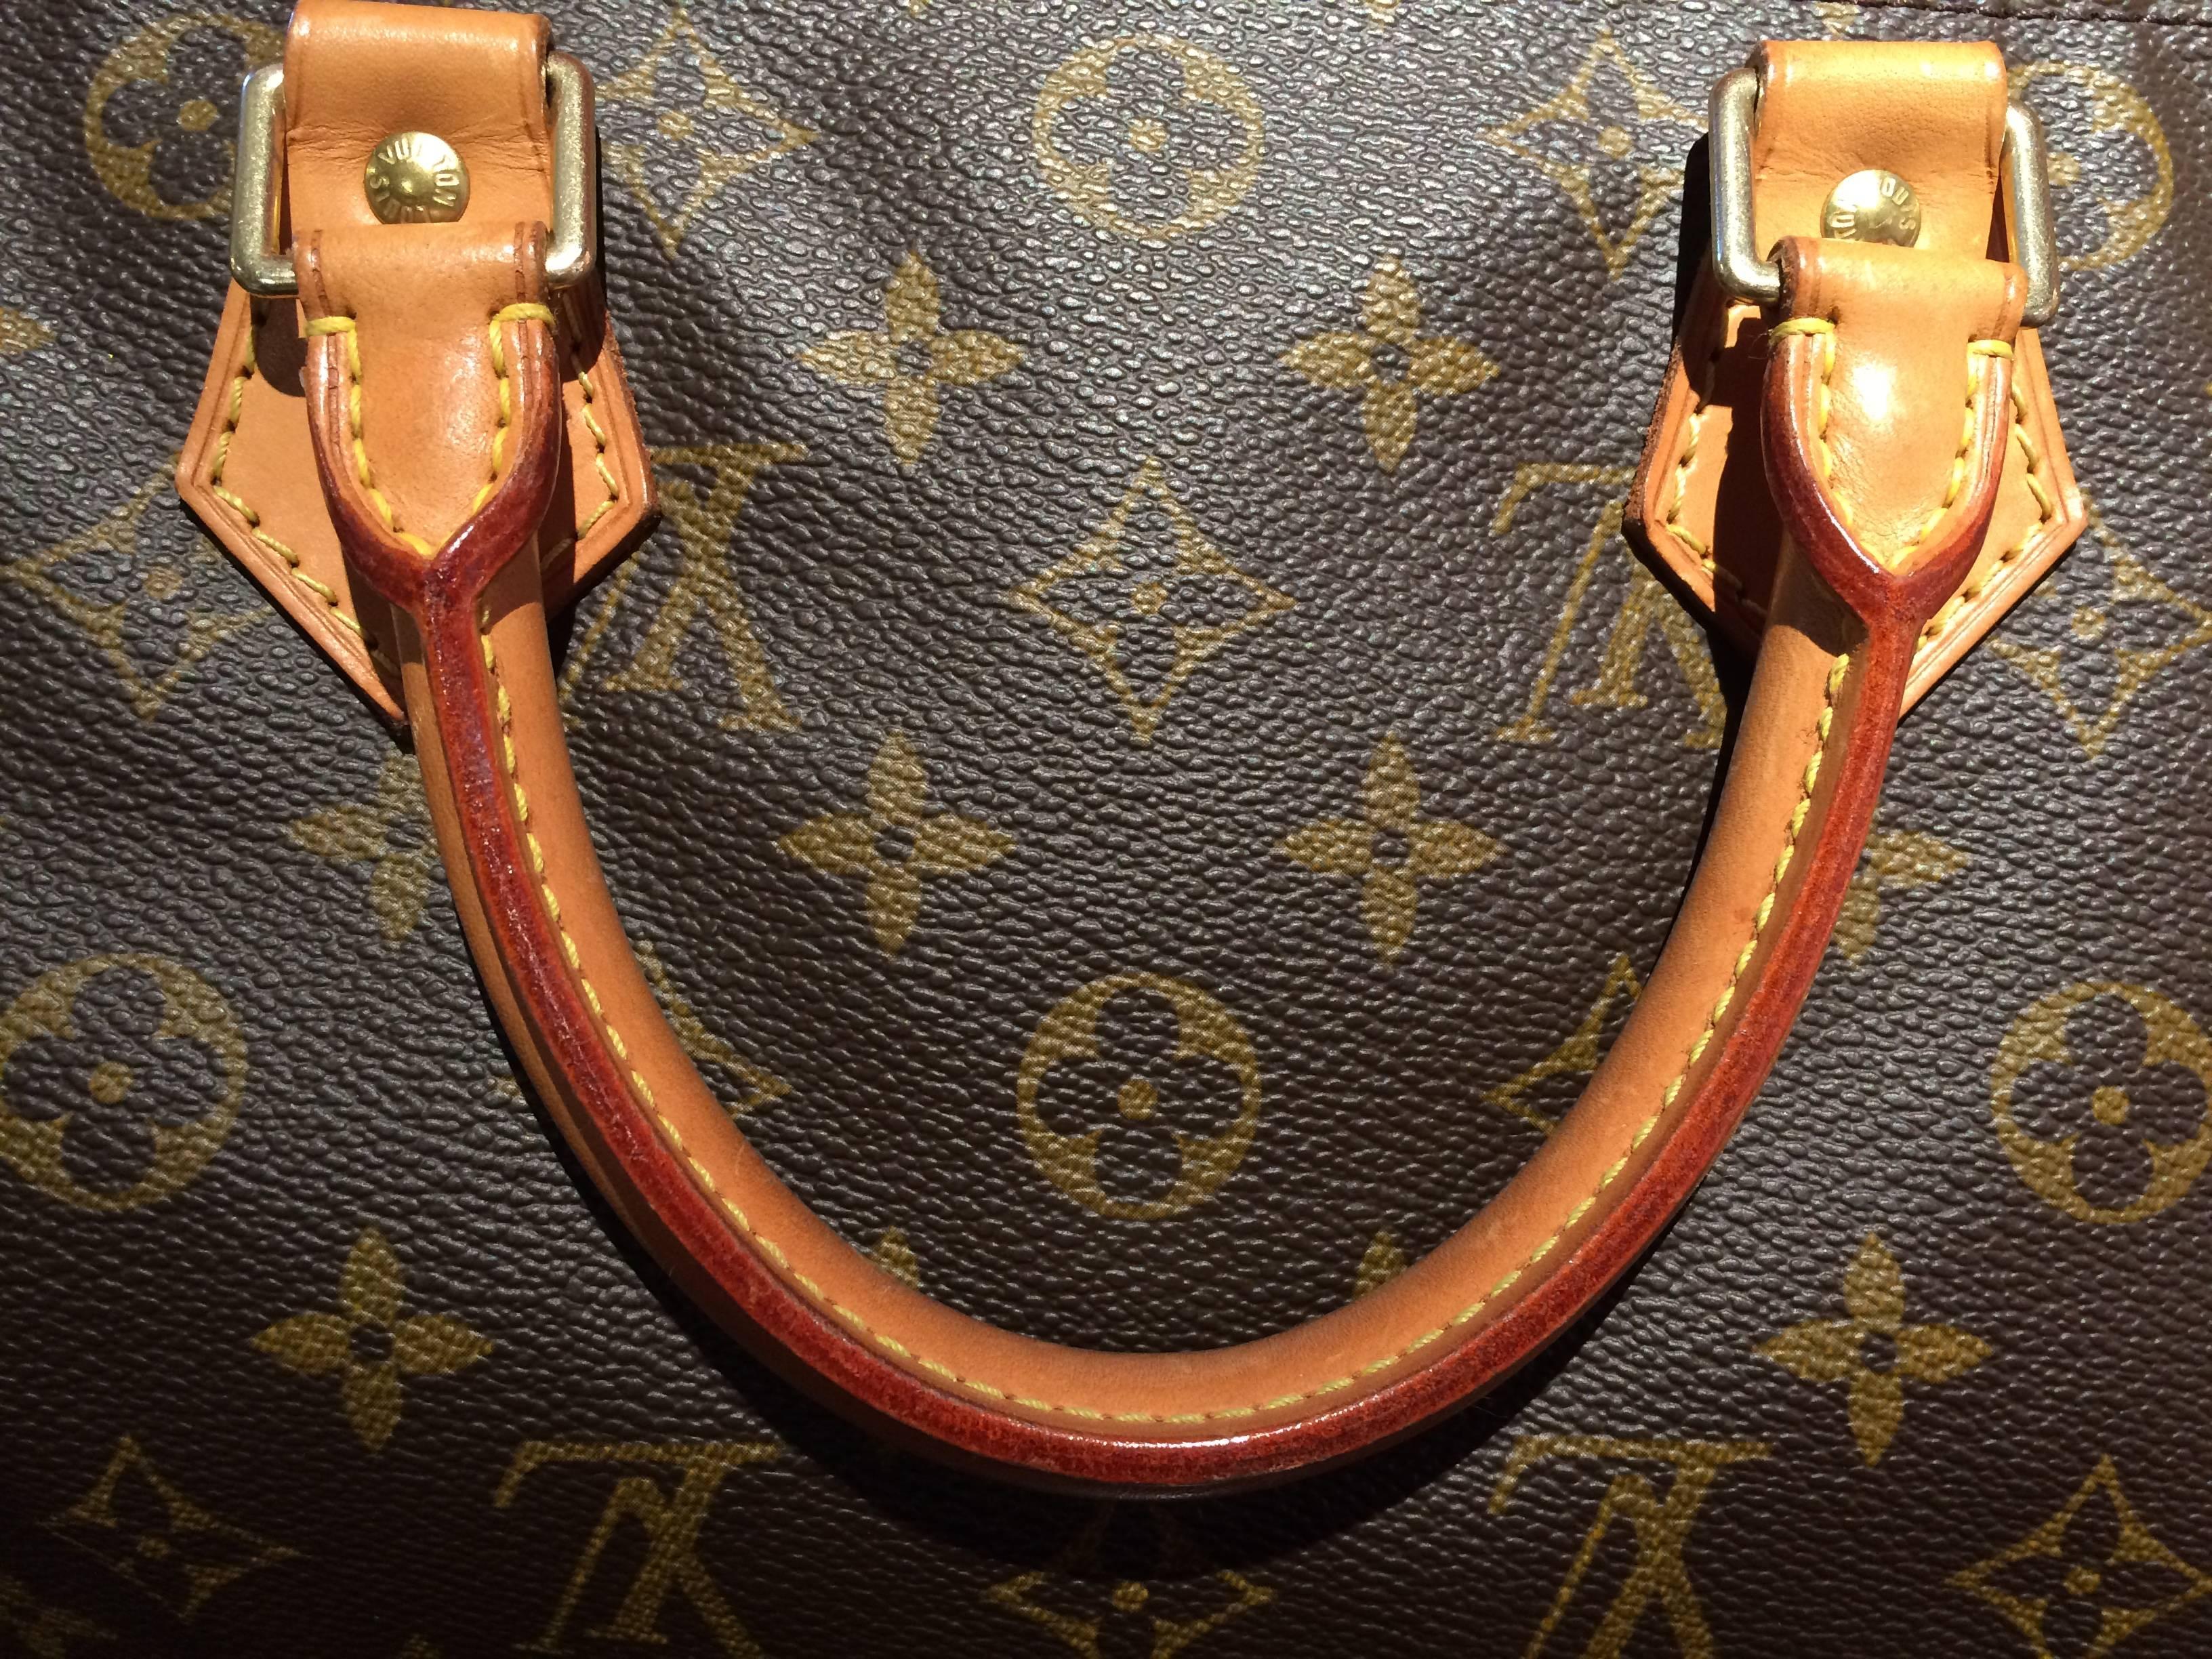 Vintage Louis Vuitton Speedy 30 Handbag. 
Monogram canvas with leather trim.
One flat pocket in the interior.
Includes original padlock (no keys).
